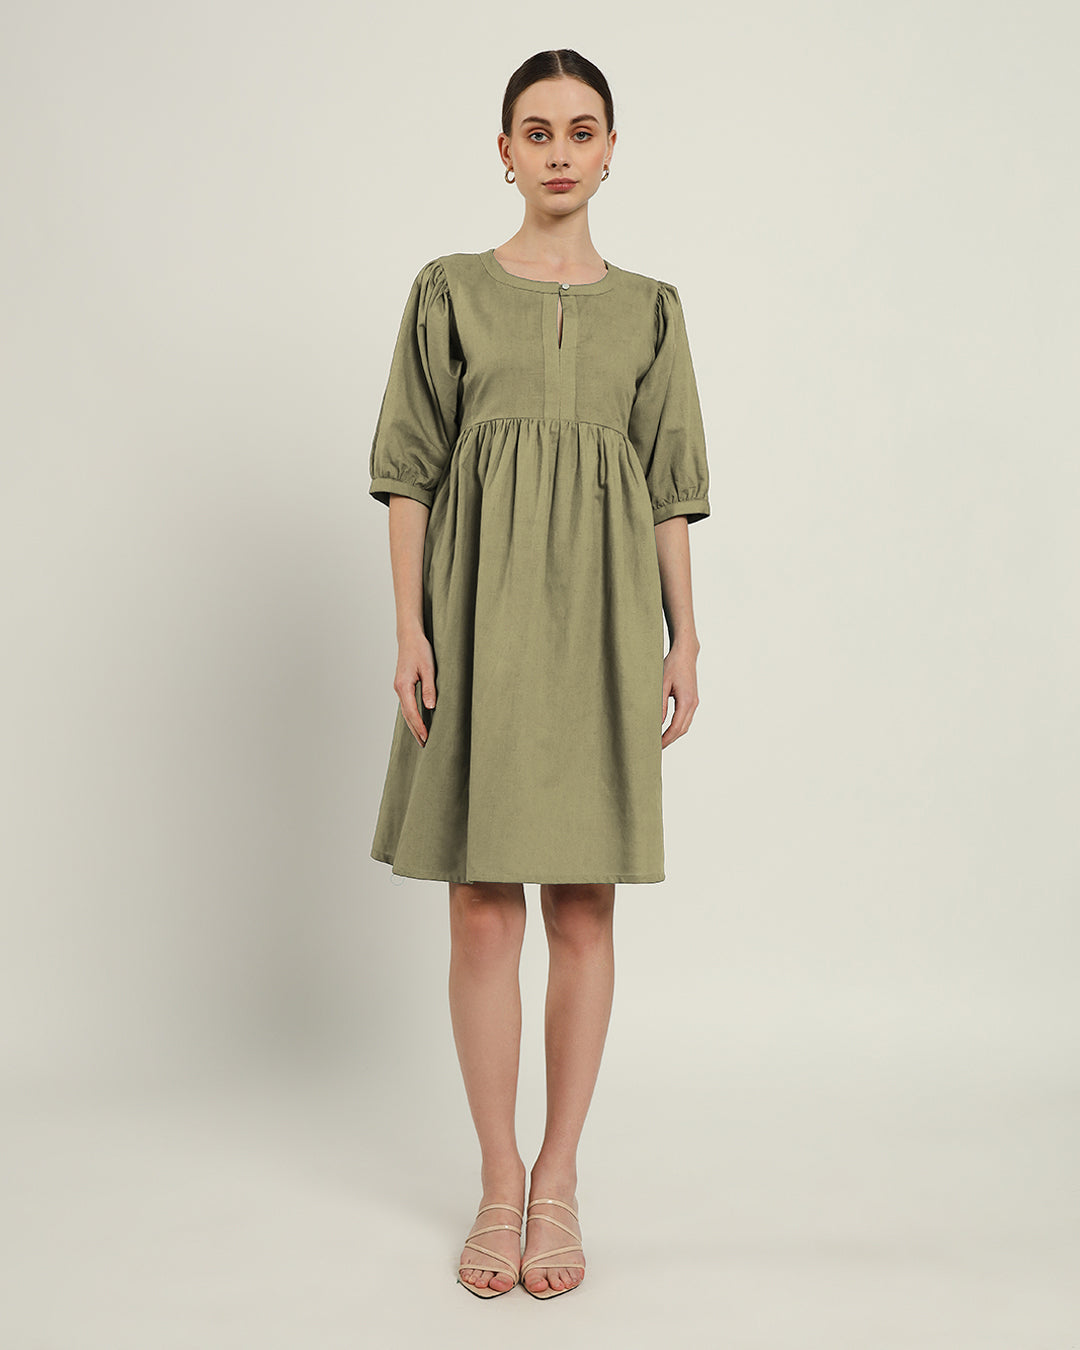 The Aira Daisy Olive Linen Dress